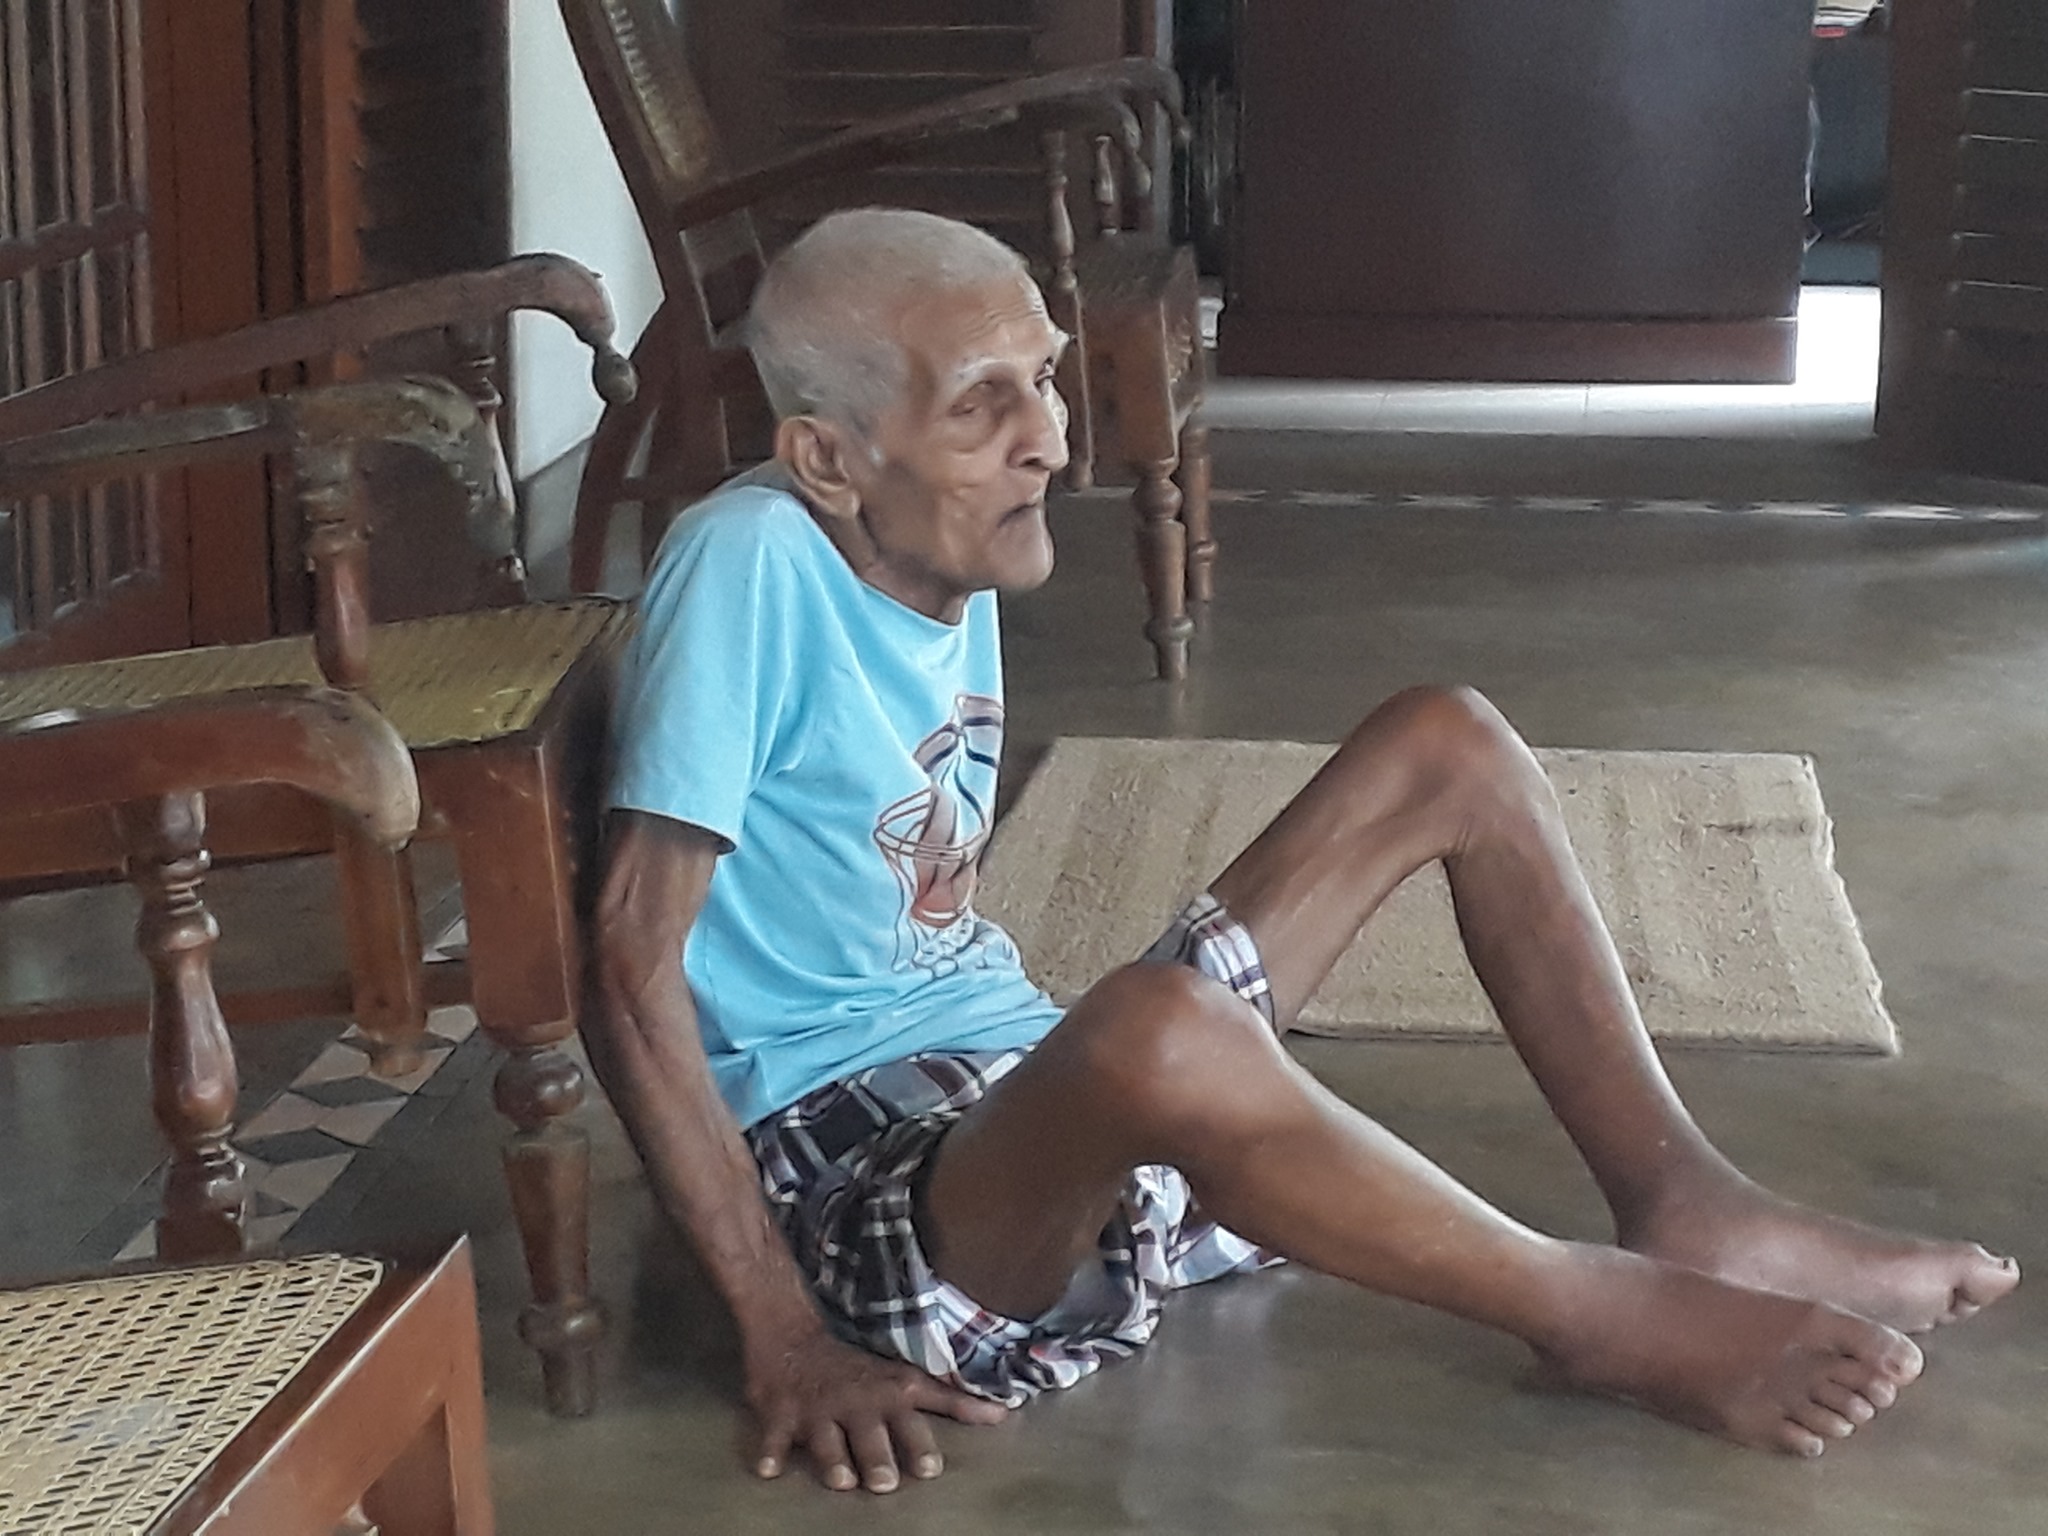 An elderly person